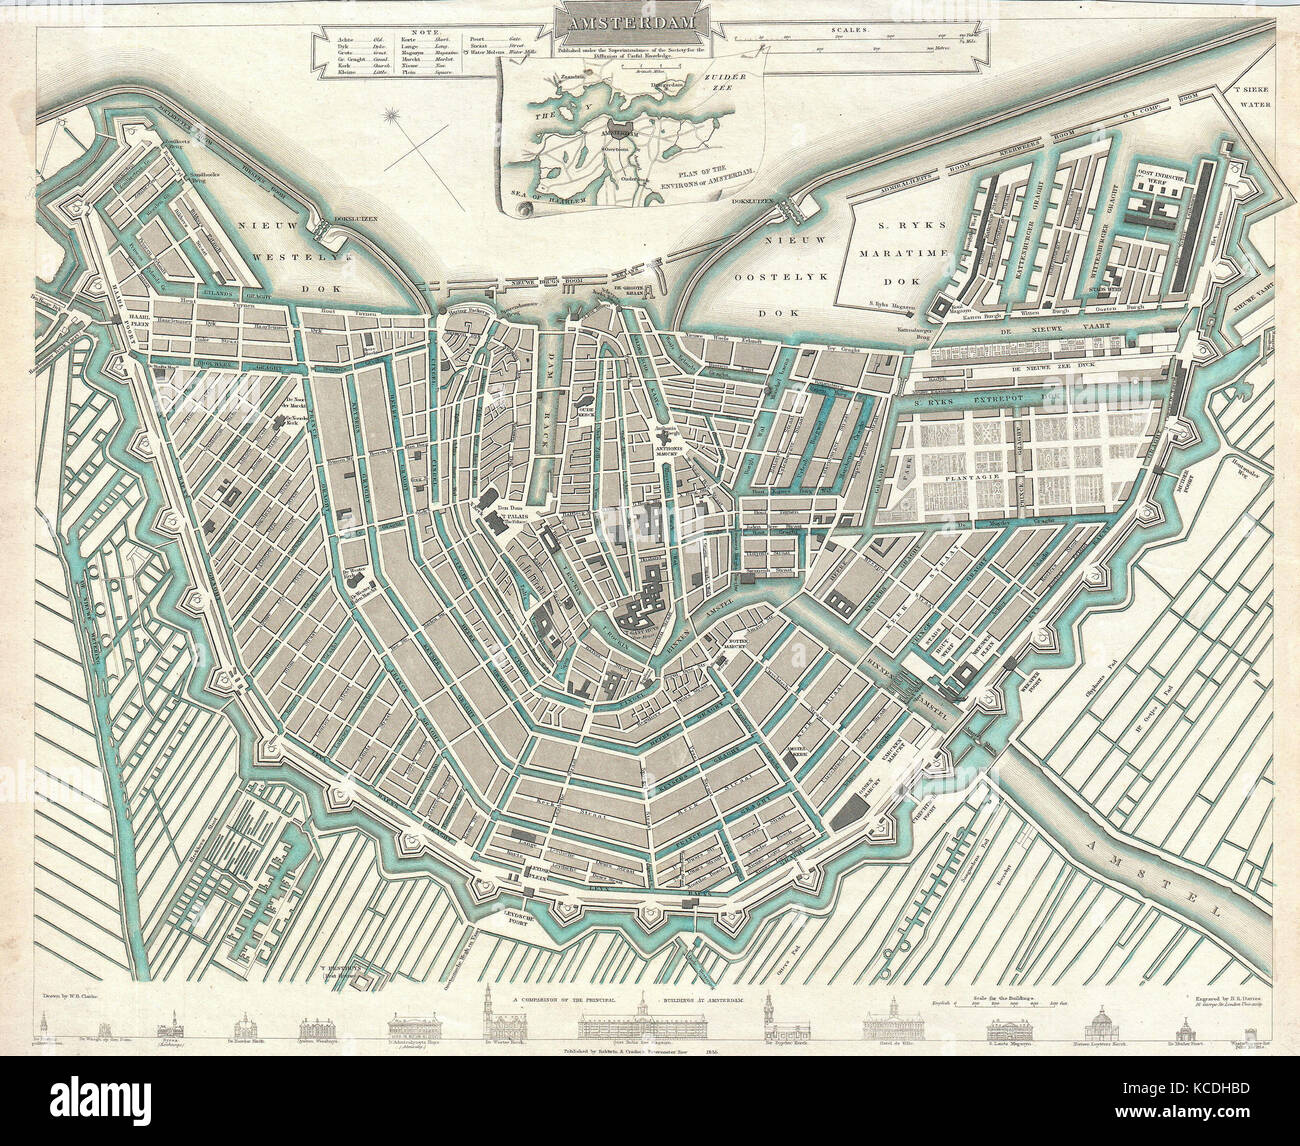 1835, S.D.U.K. Plan de la ville ou d'un plan d'Amsterdam, Pays-Bas Photo  Stock - Alamy